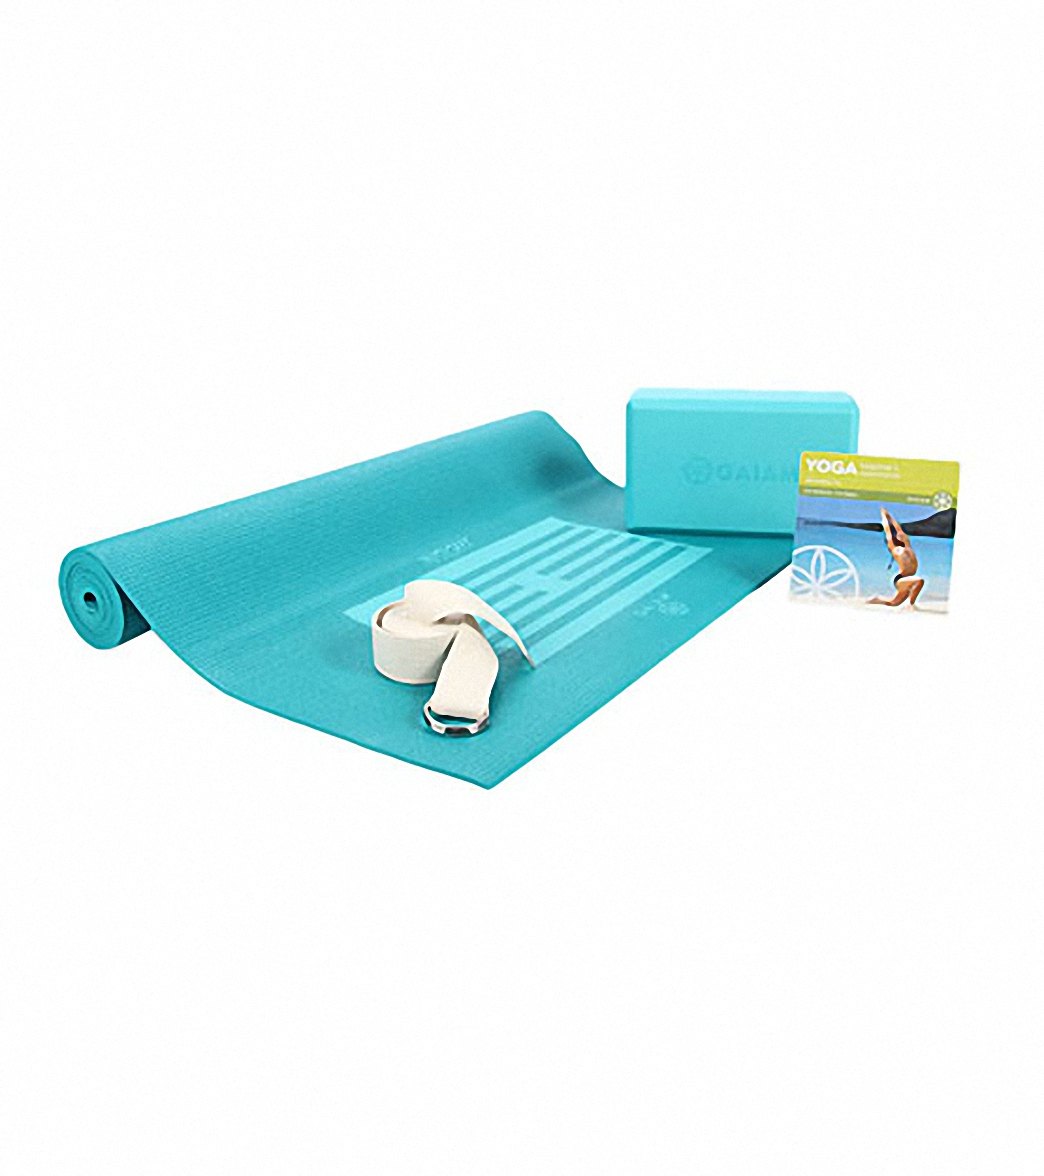 Yoga Starter Kit - Turquoise